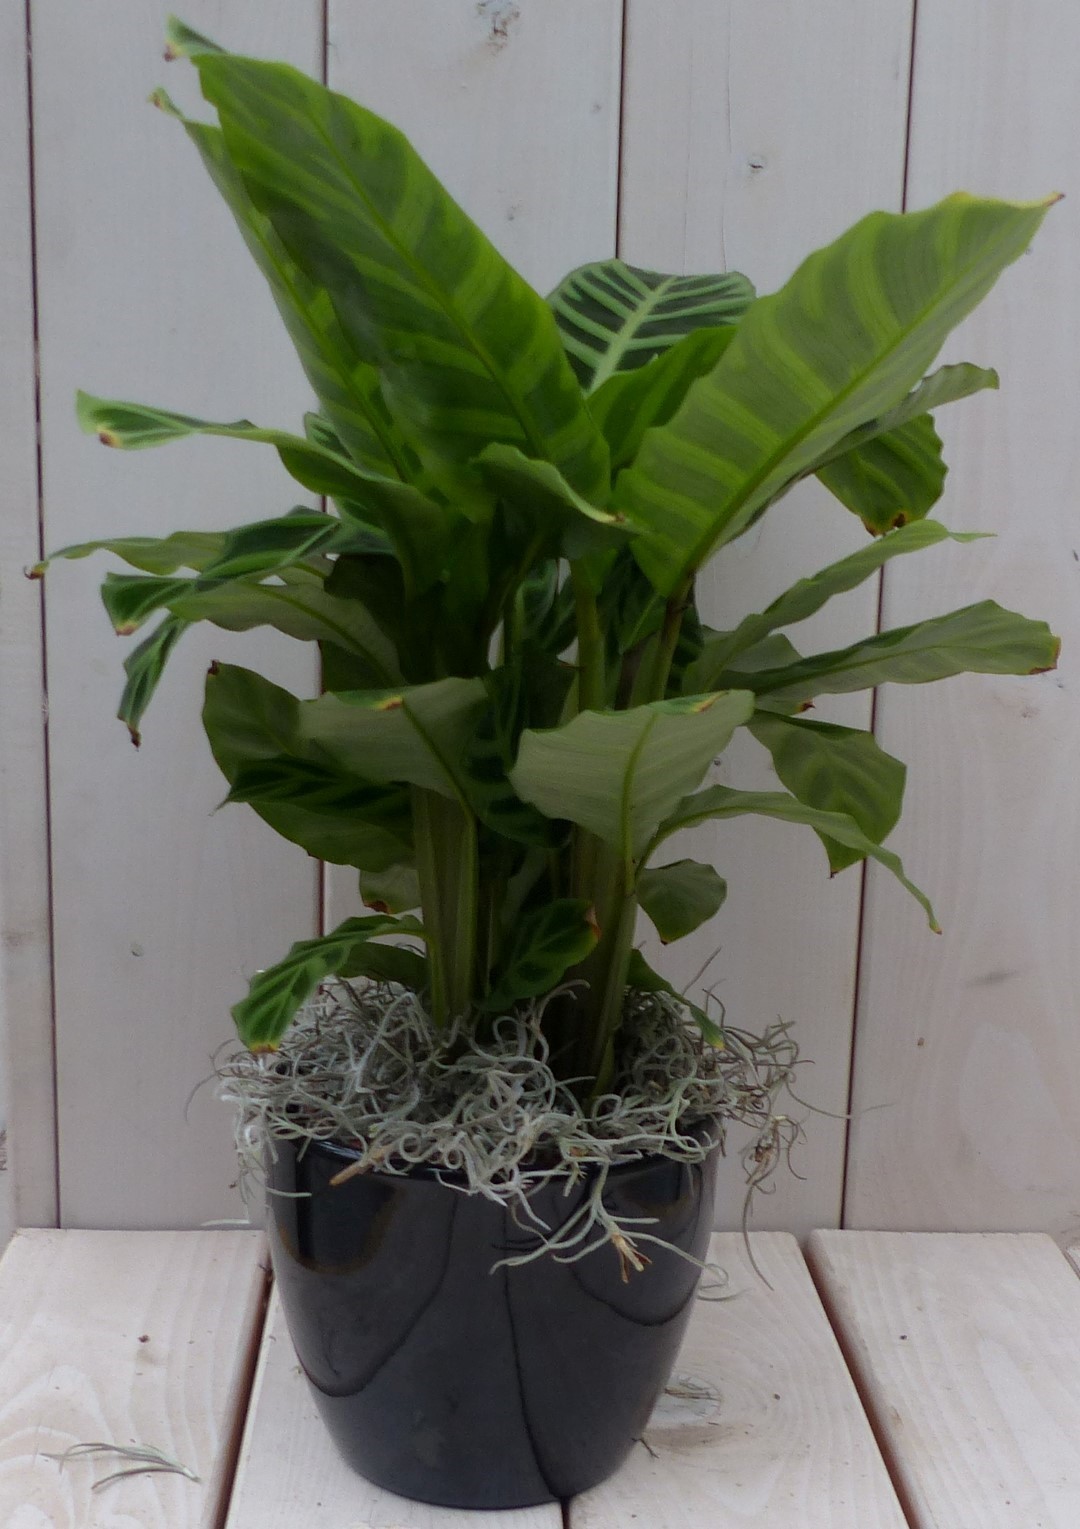 Calathea groen blad zwarte/antraciete pot 40 cm